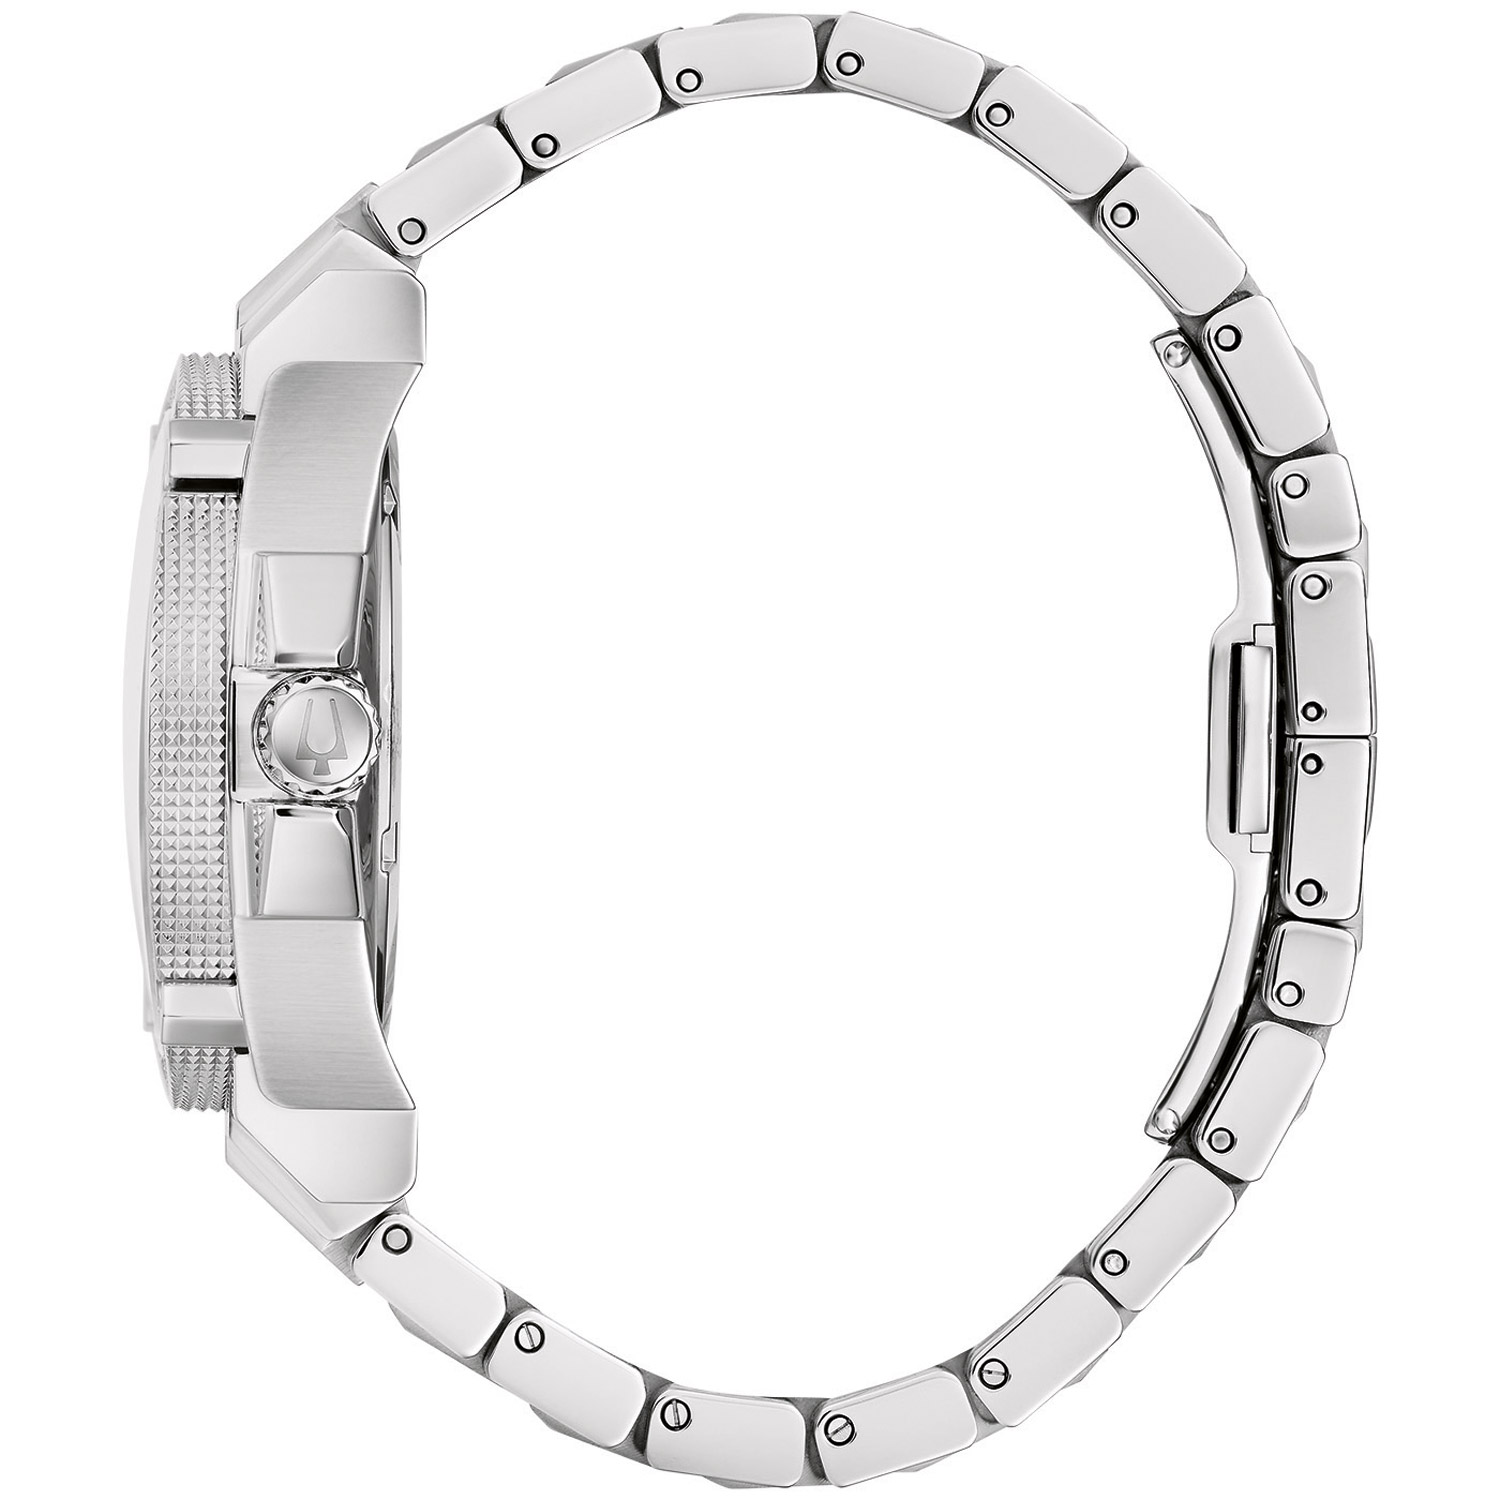 Bulova Men\'s Wristwatch Luxury Steel/Black 96B417 • uhrcenter